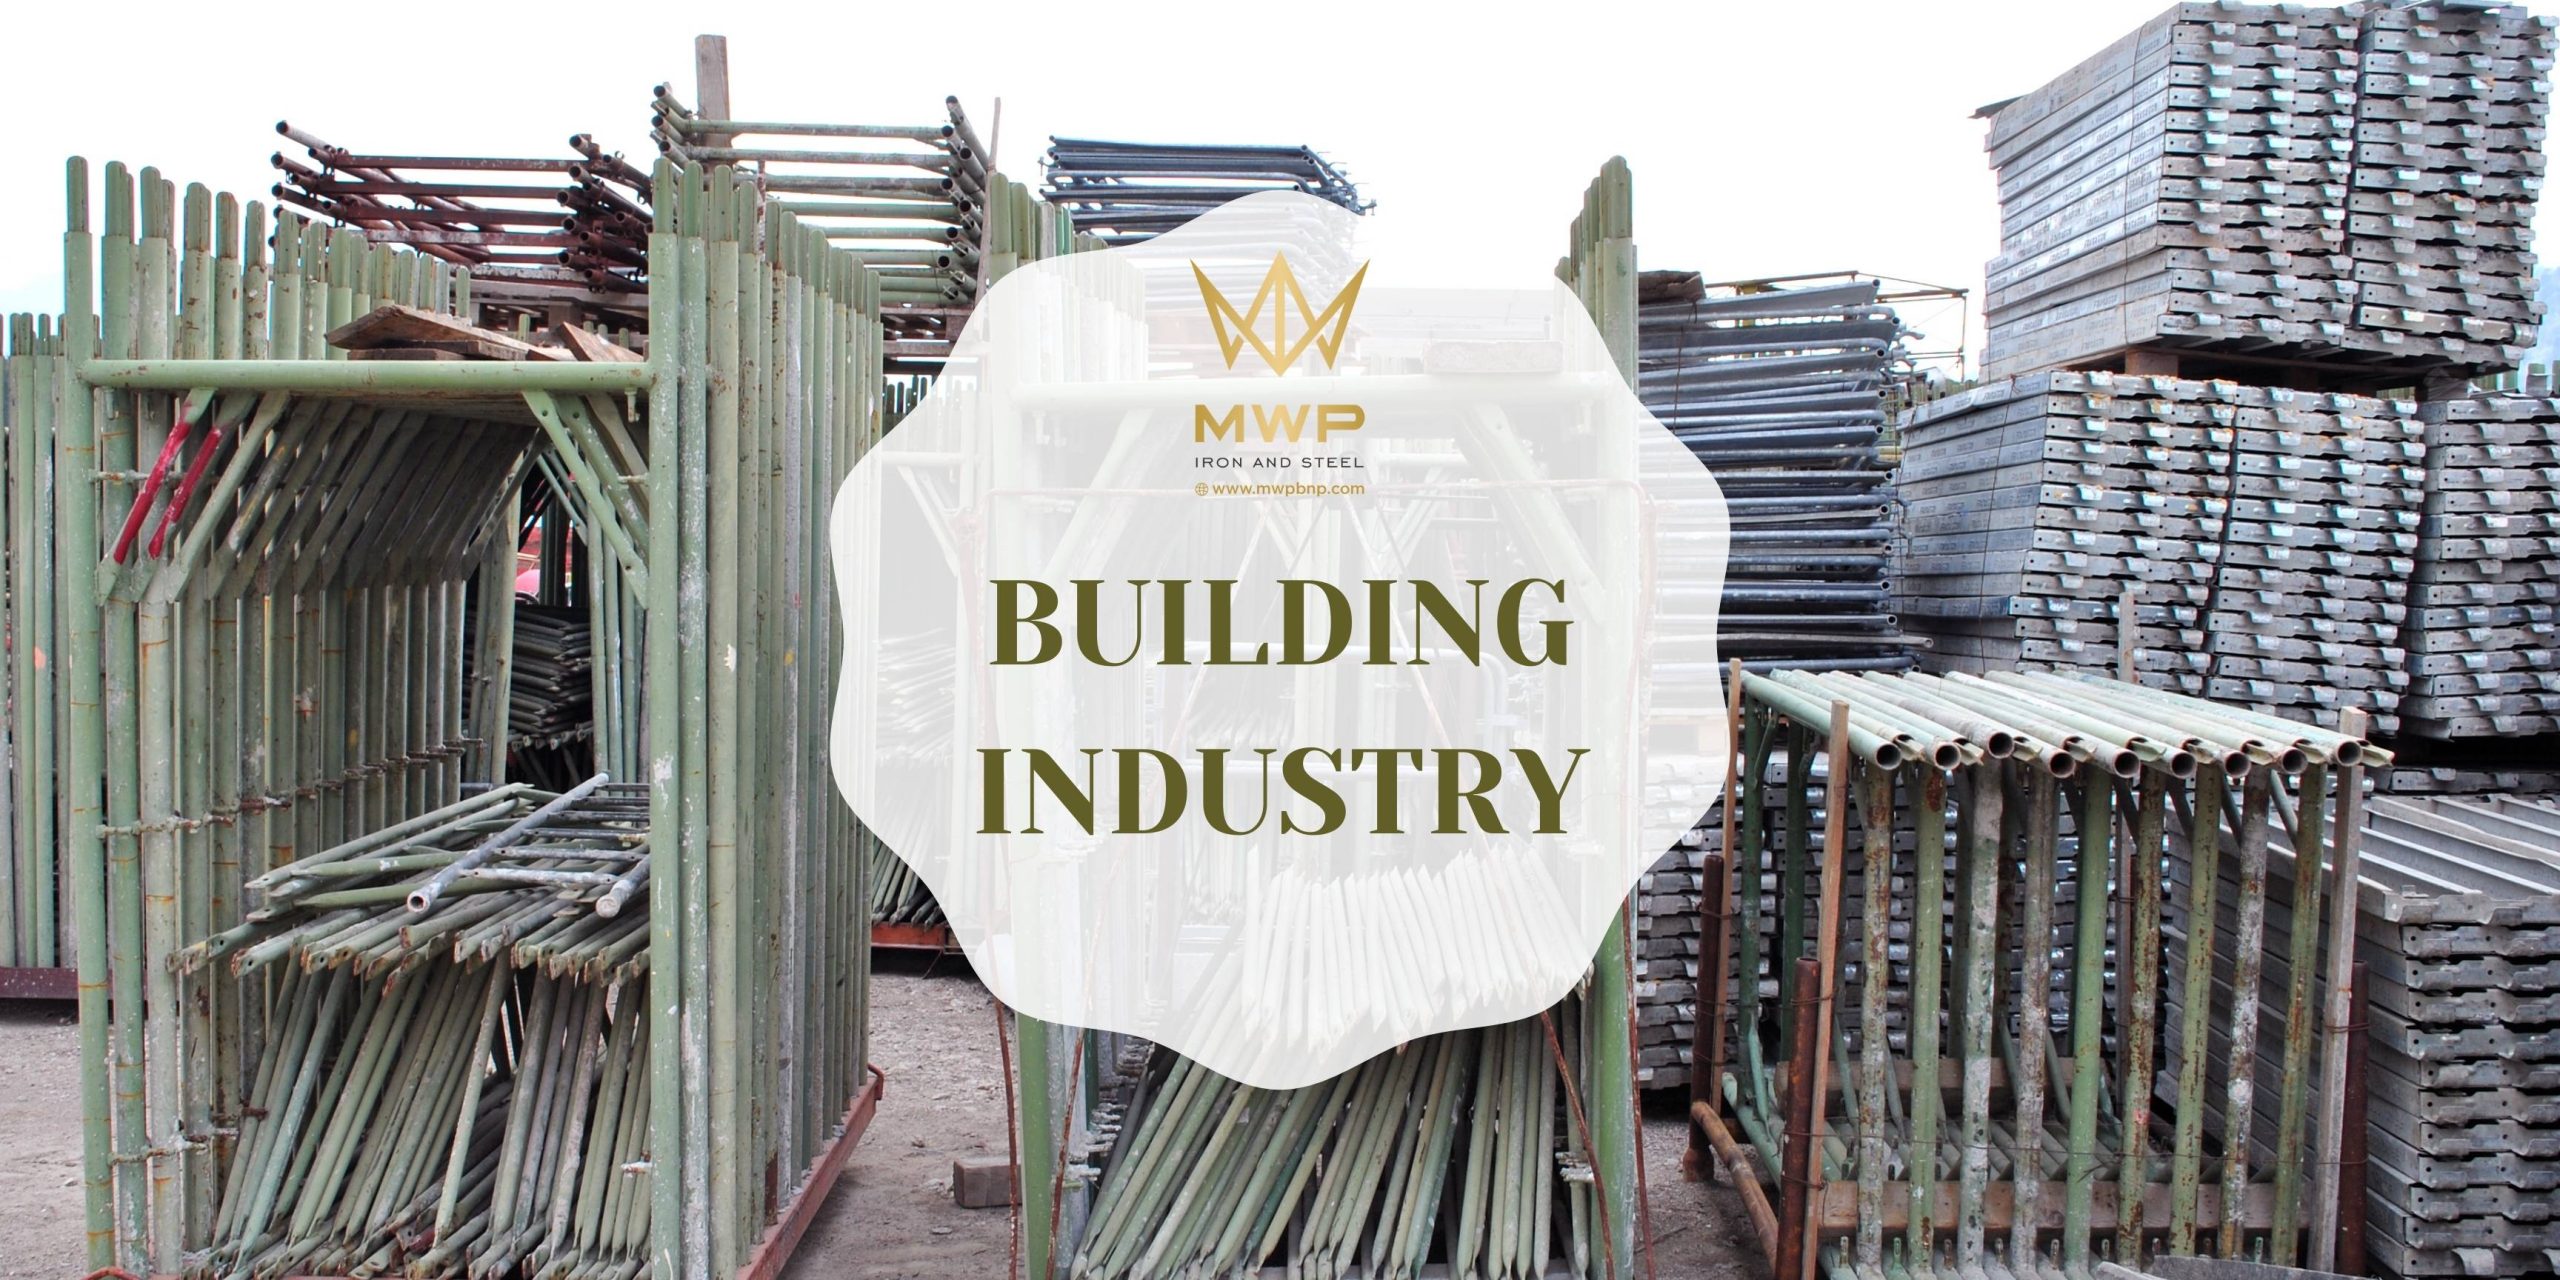 Building Industry mwpbnp